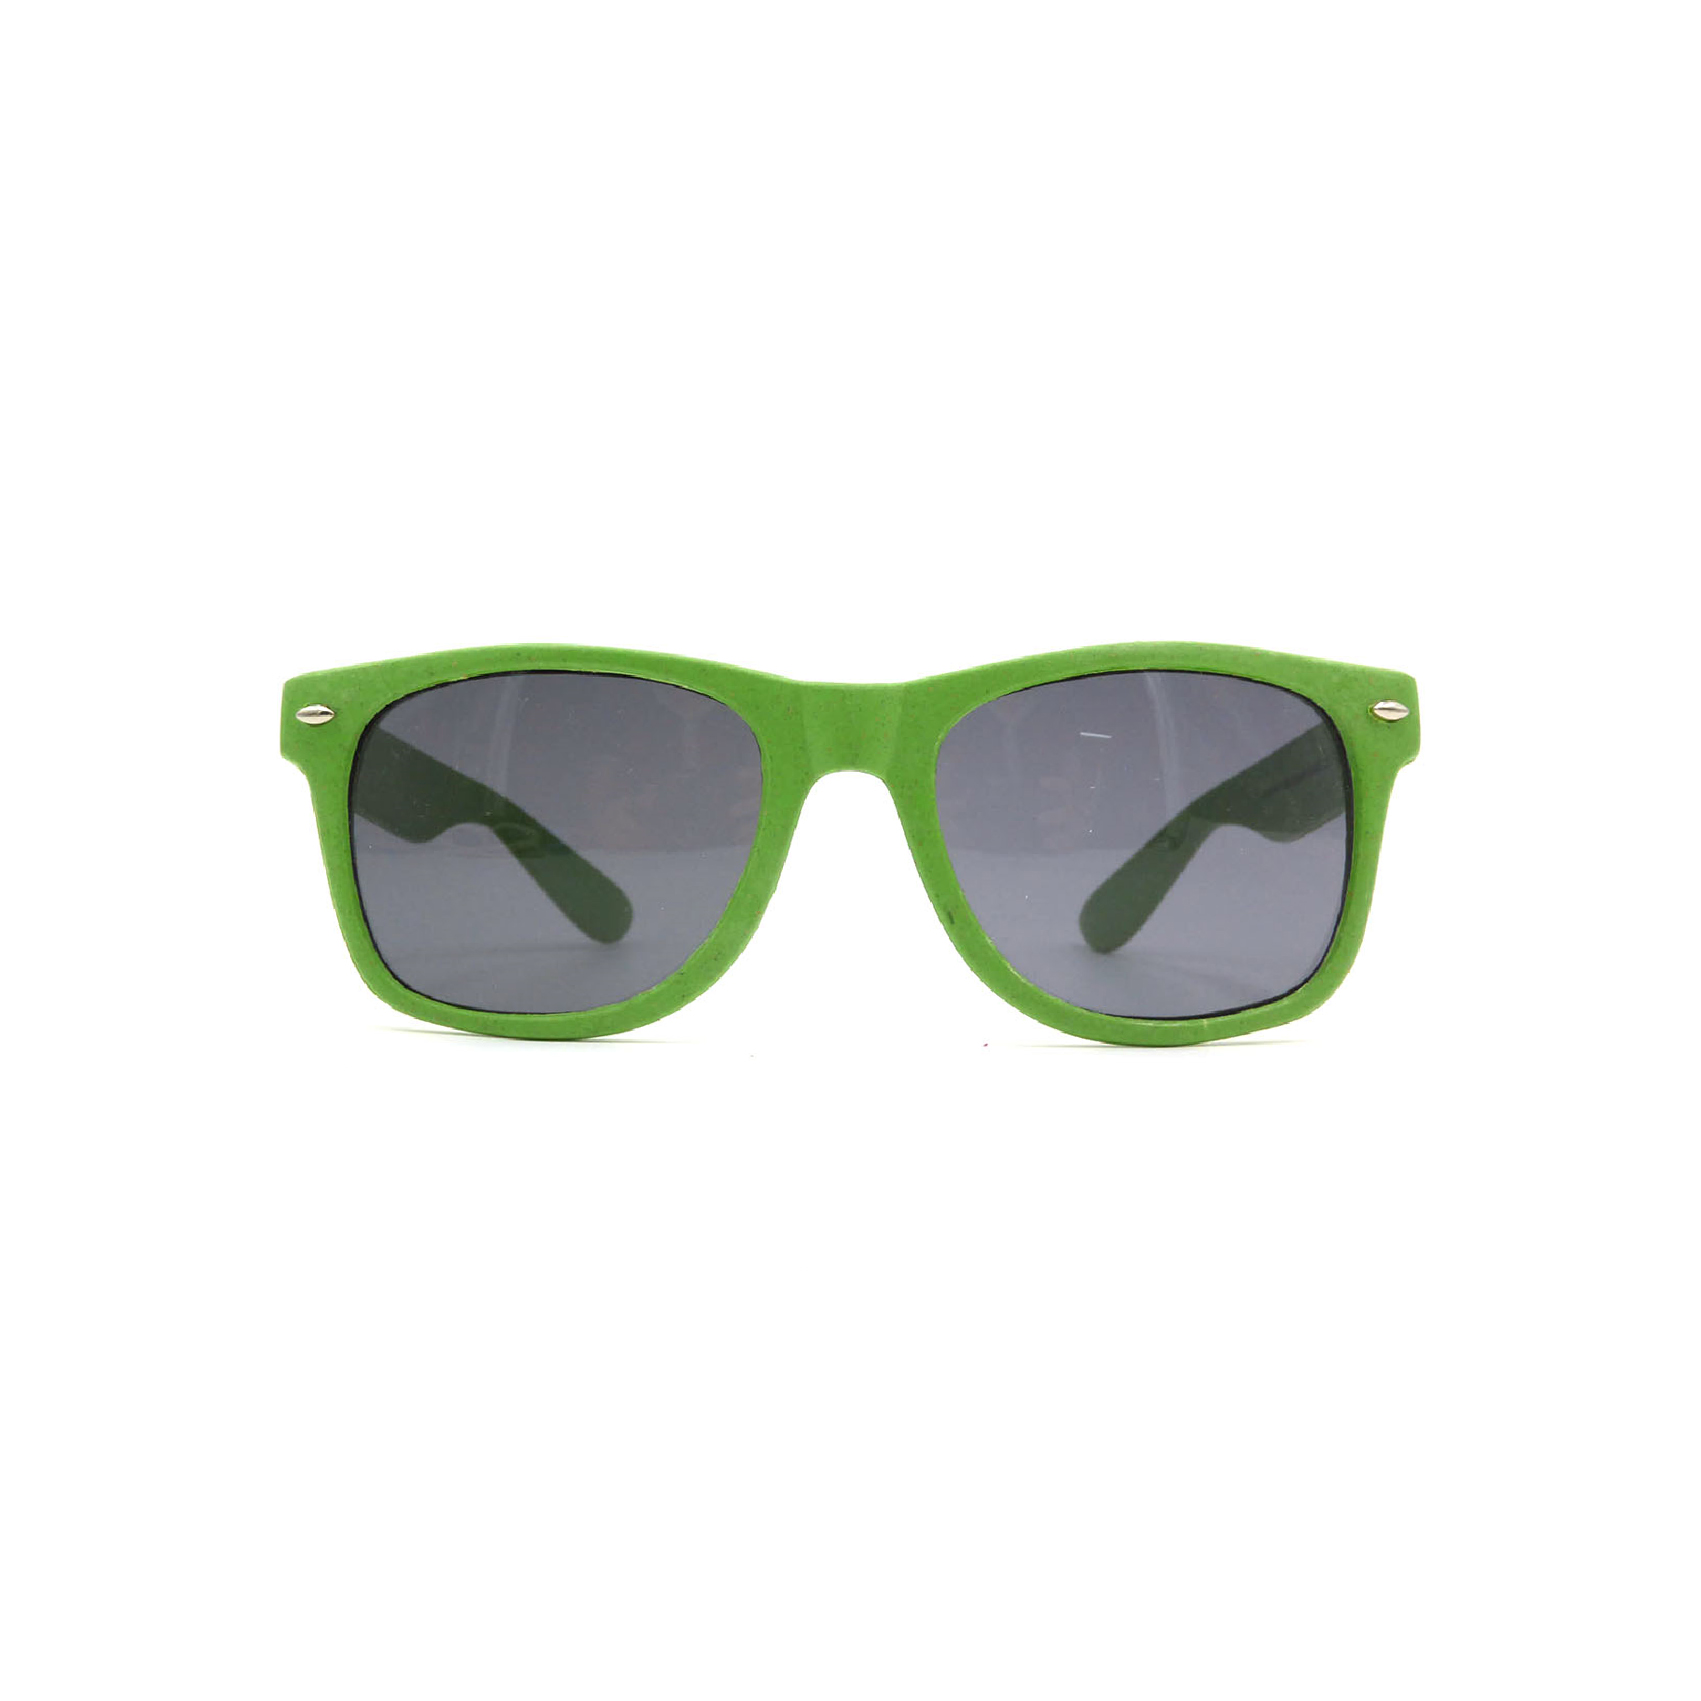 Classic Model Recycled Plastic Sunglasses Wholesale Eco Friendly Polarized Wheat Straw Sunglasses